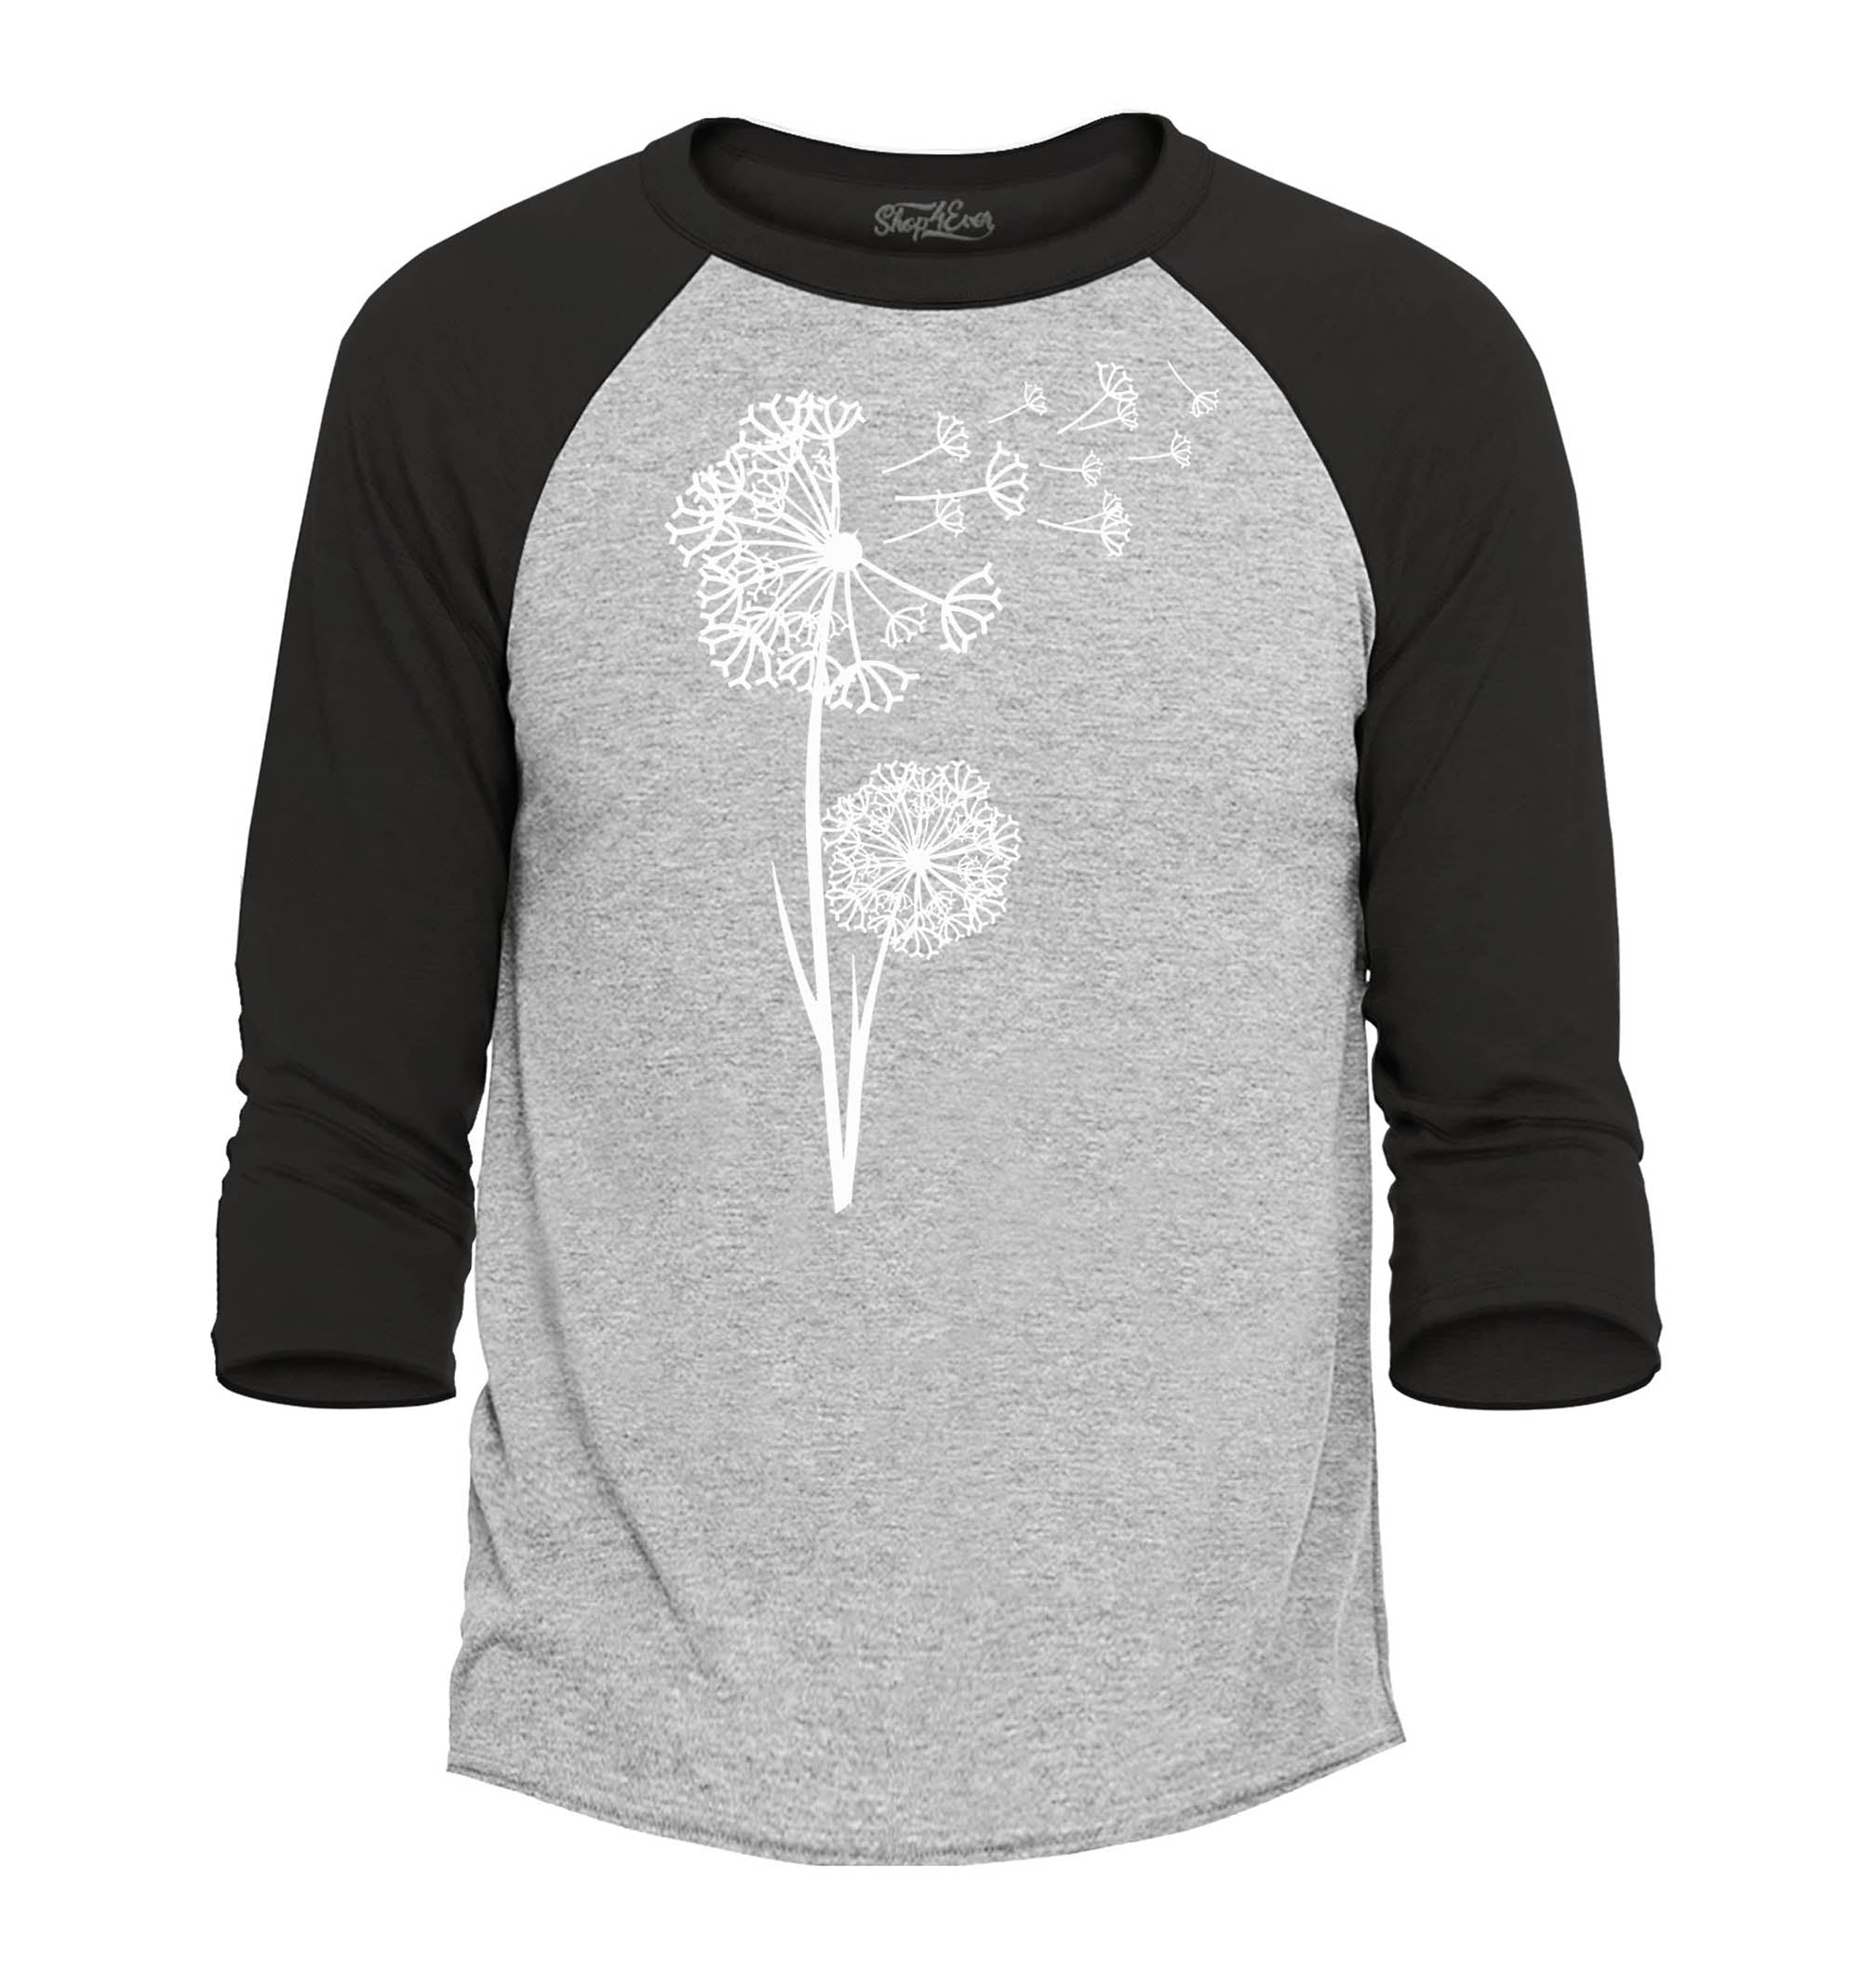 Dandelion Blowing Wish Flower Wildflowers Raglan Baseball Shirt